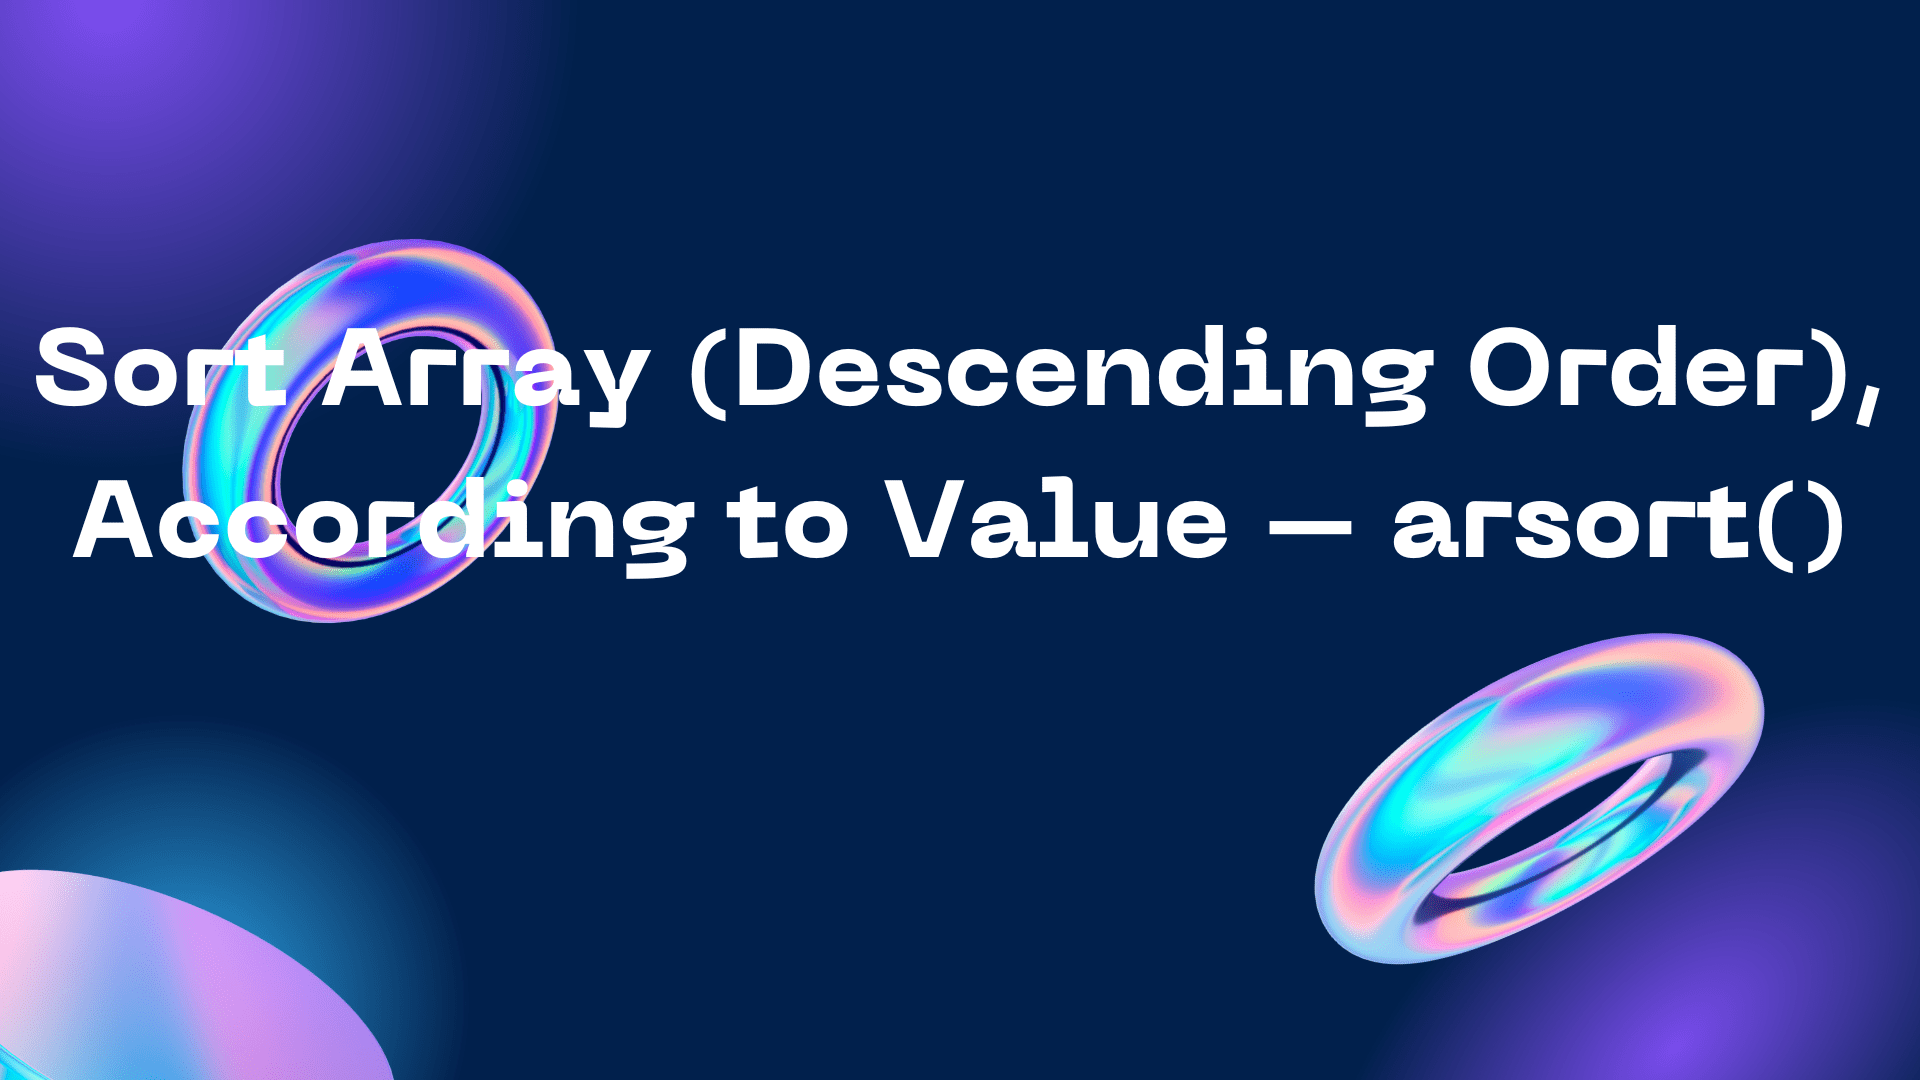 Sort Array (Descending Order), According to Value – arsort()